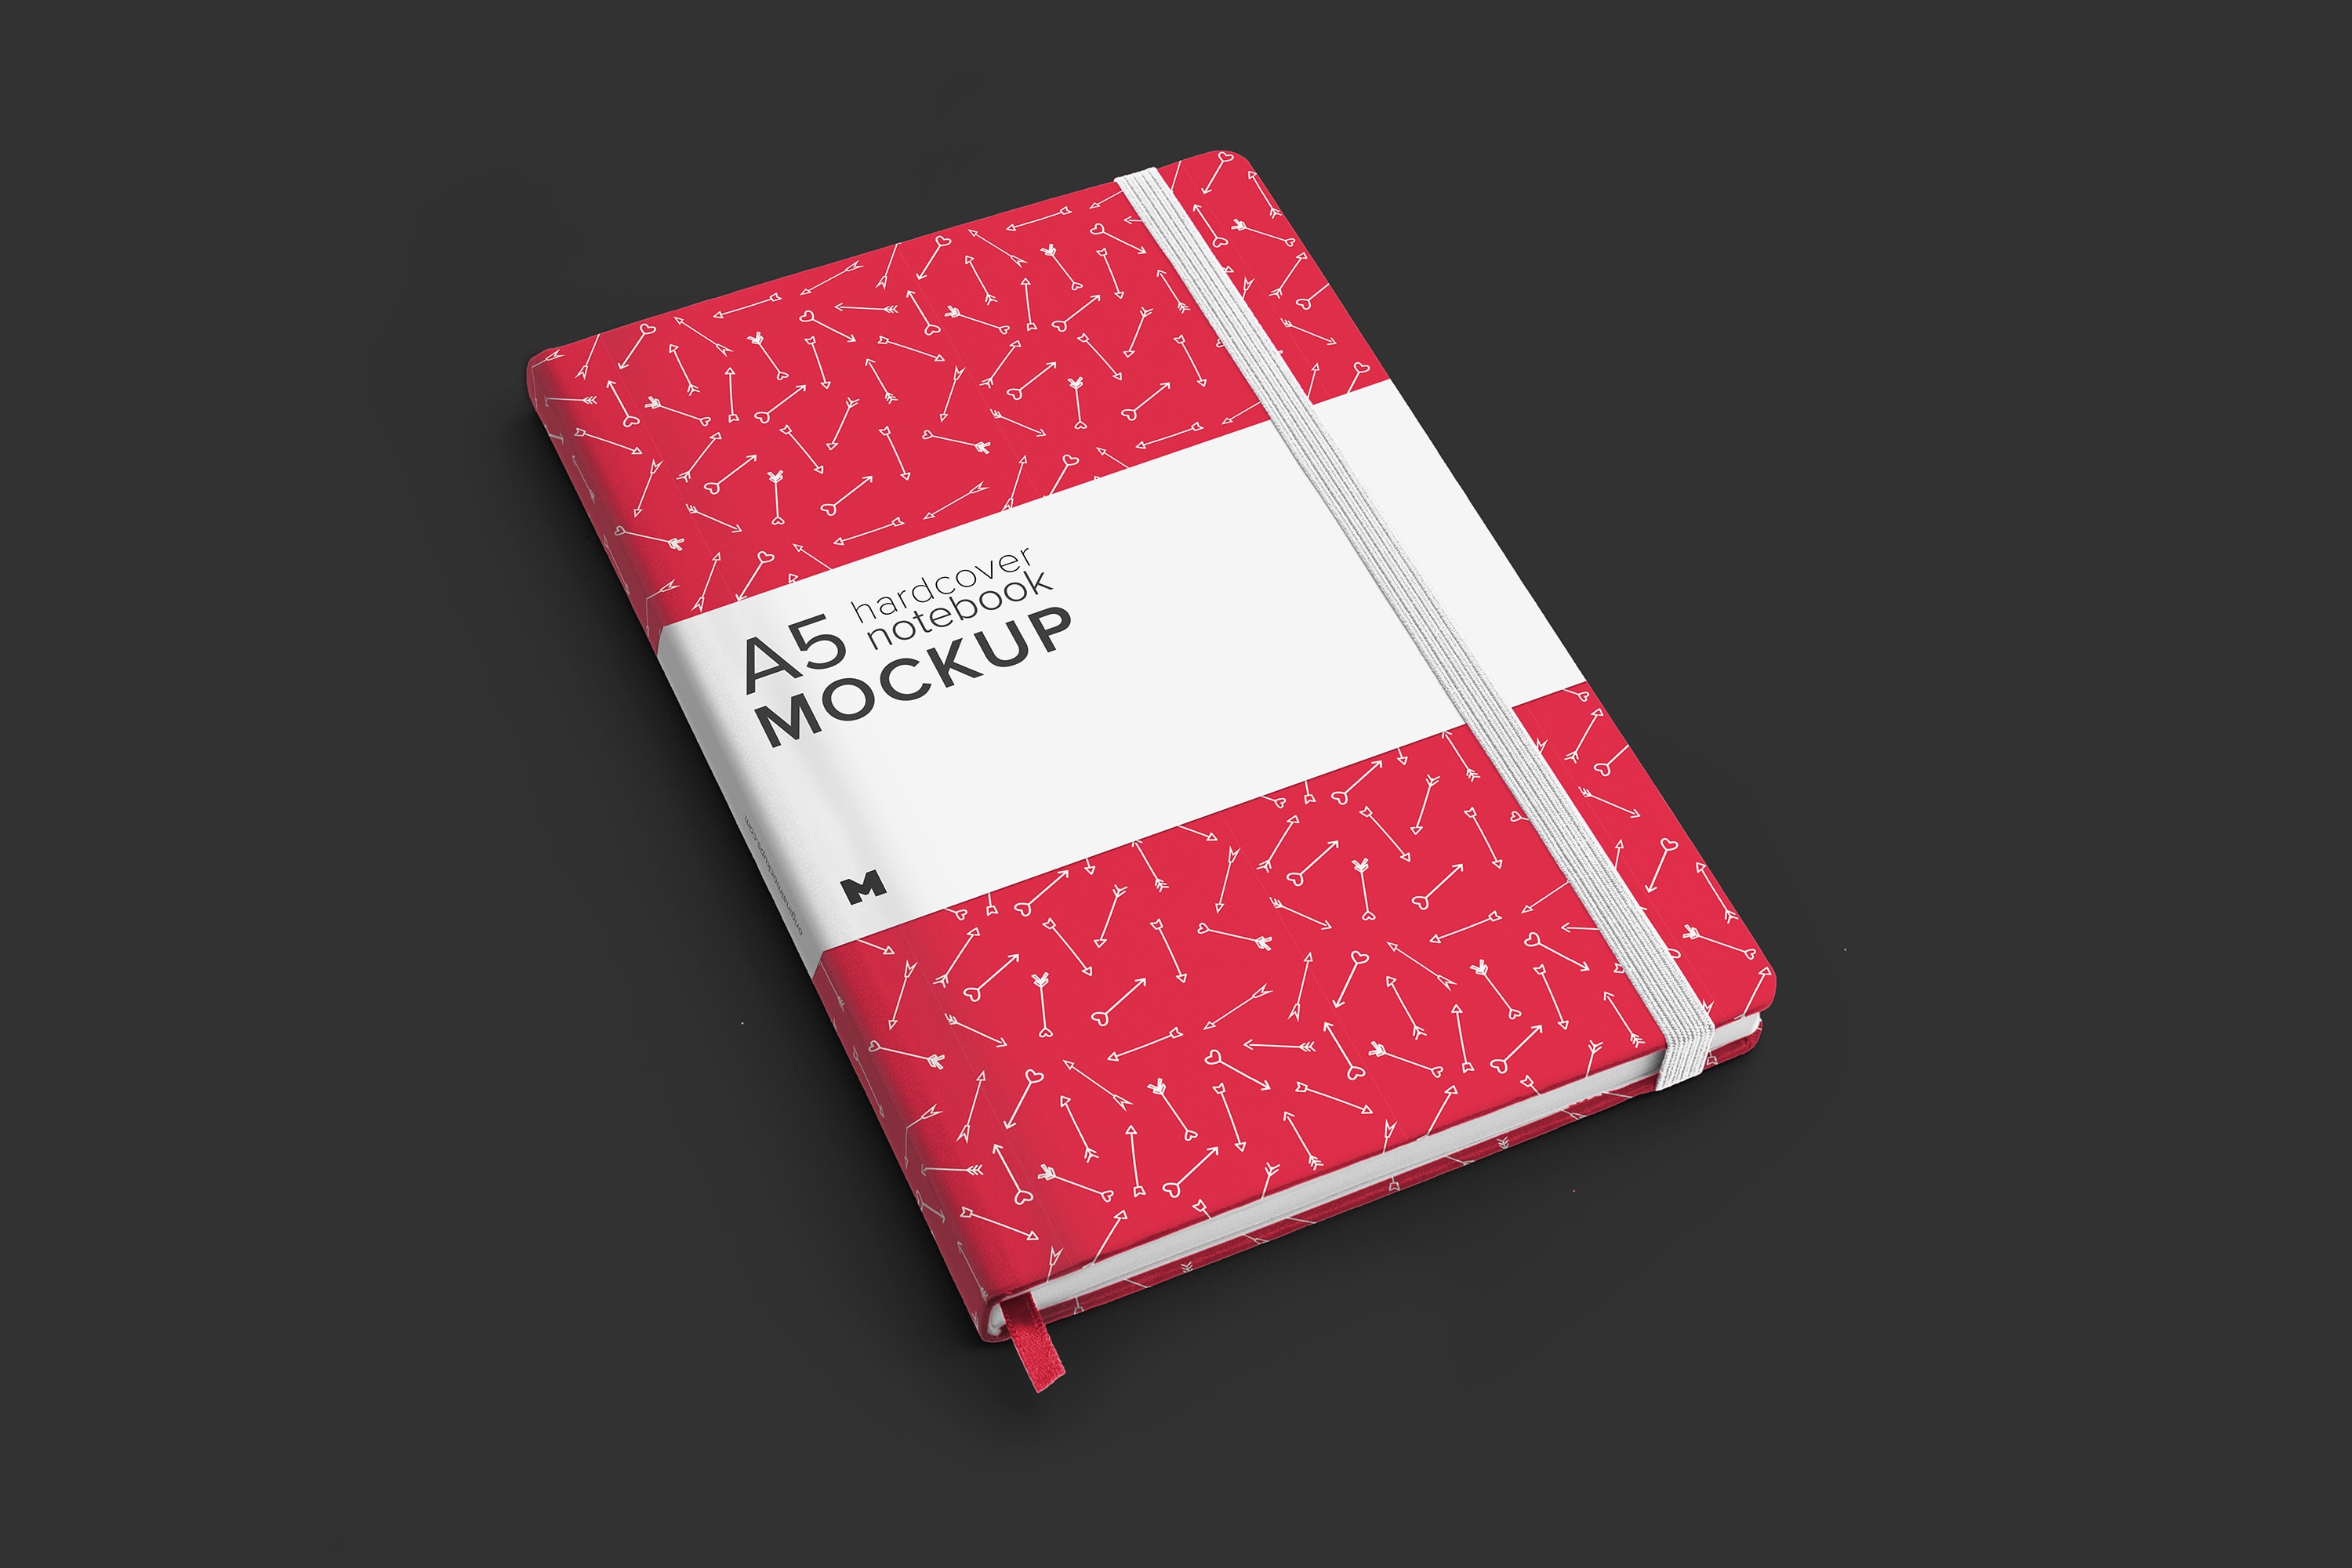 笔记本封面样机 a5 hardcover notebook mockup 01 – 云瑞设计